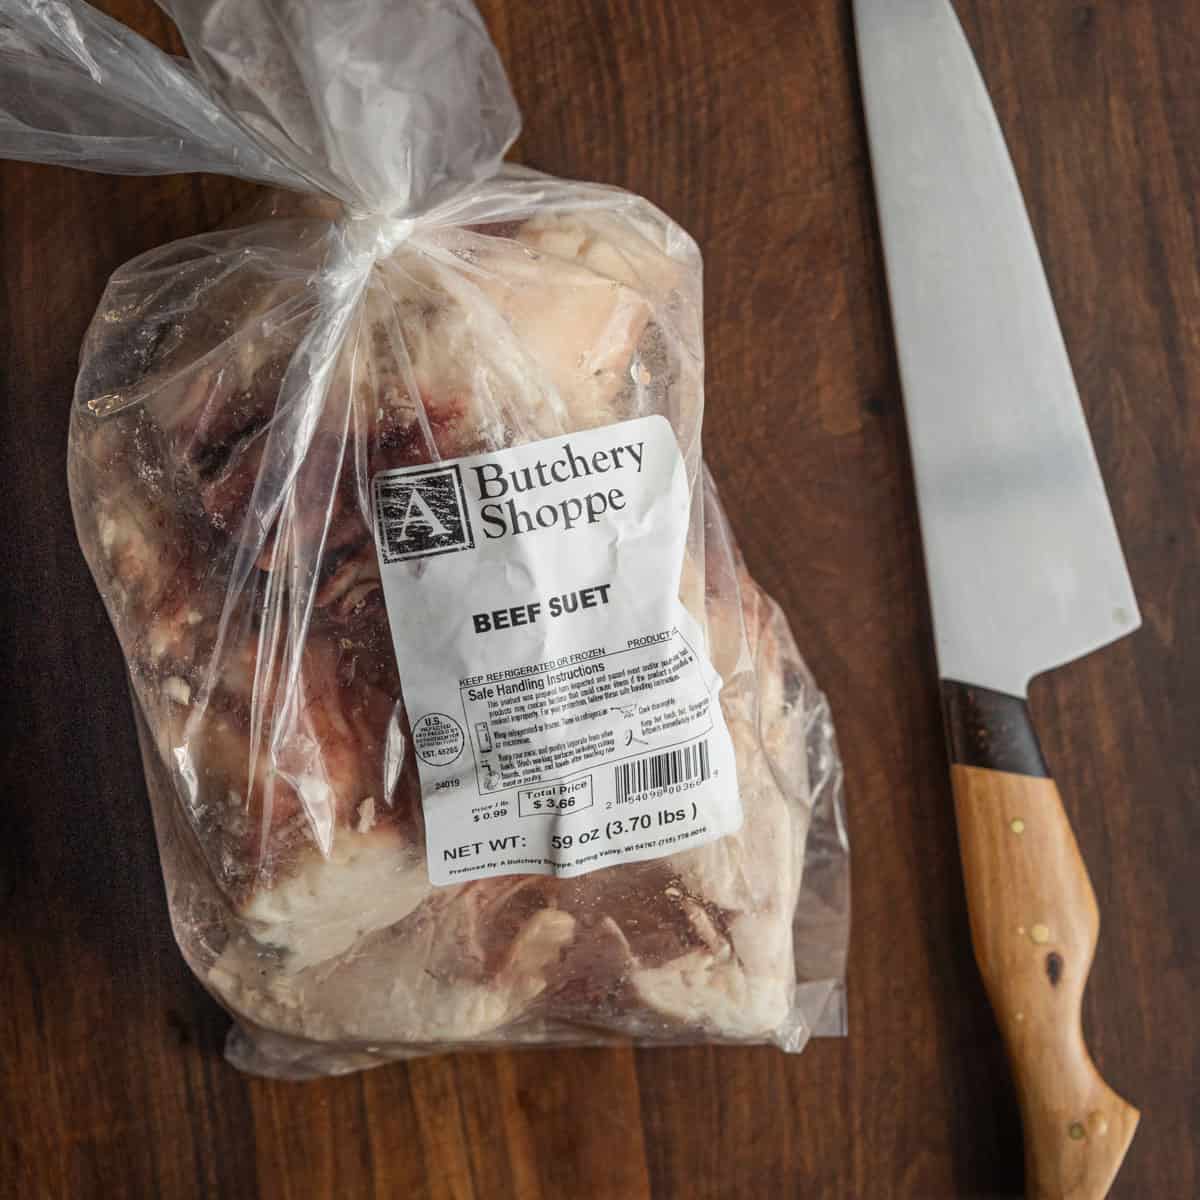 A knife next to a bag of frozen beef suet from a butcher shop. 